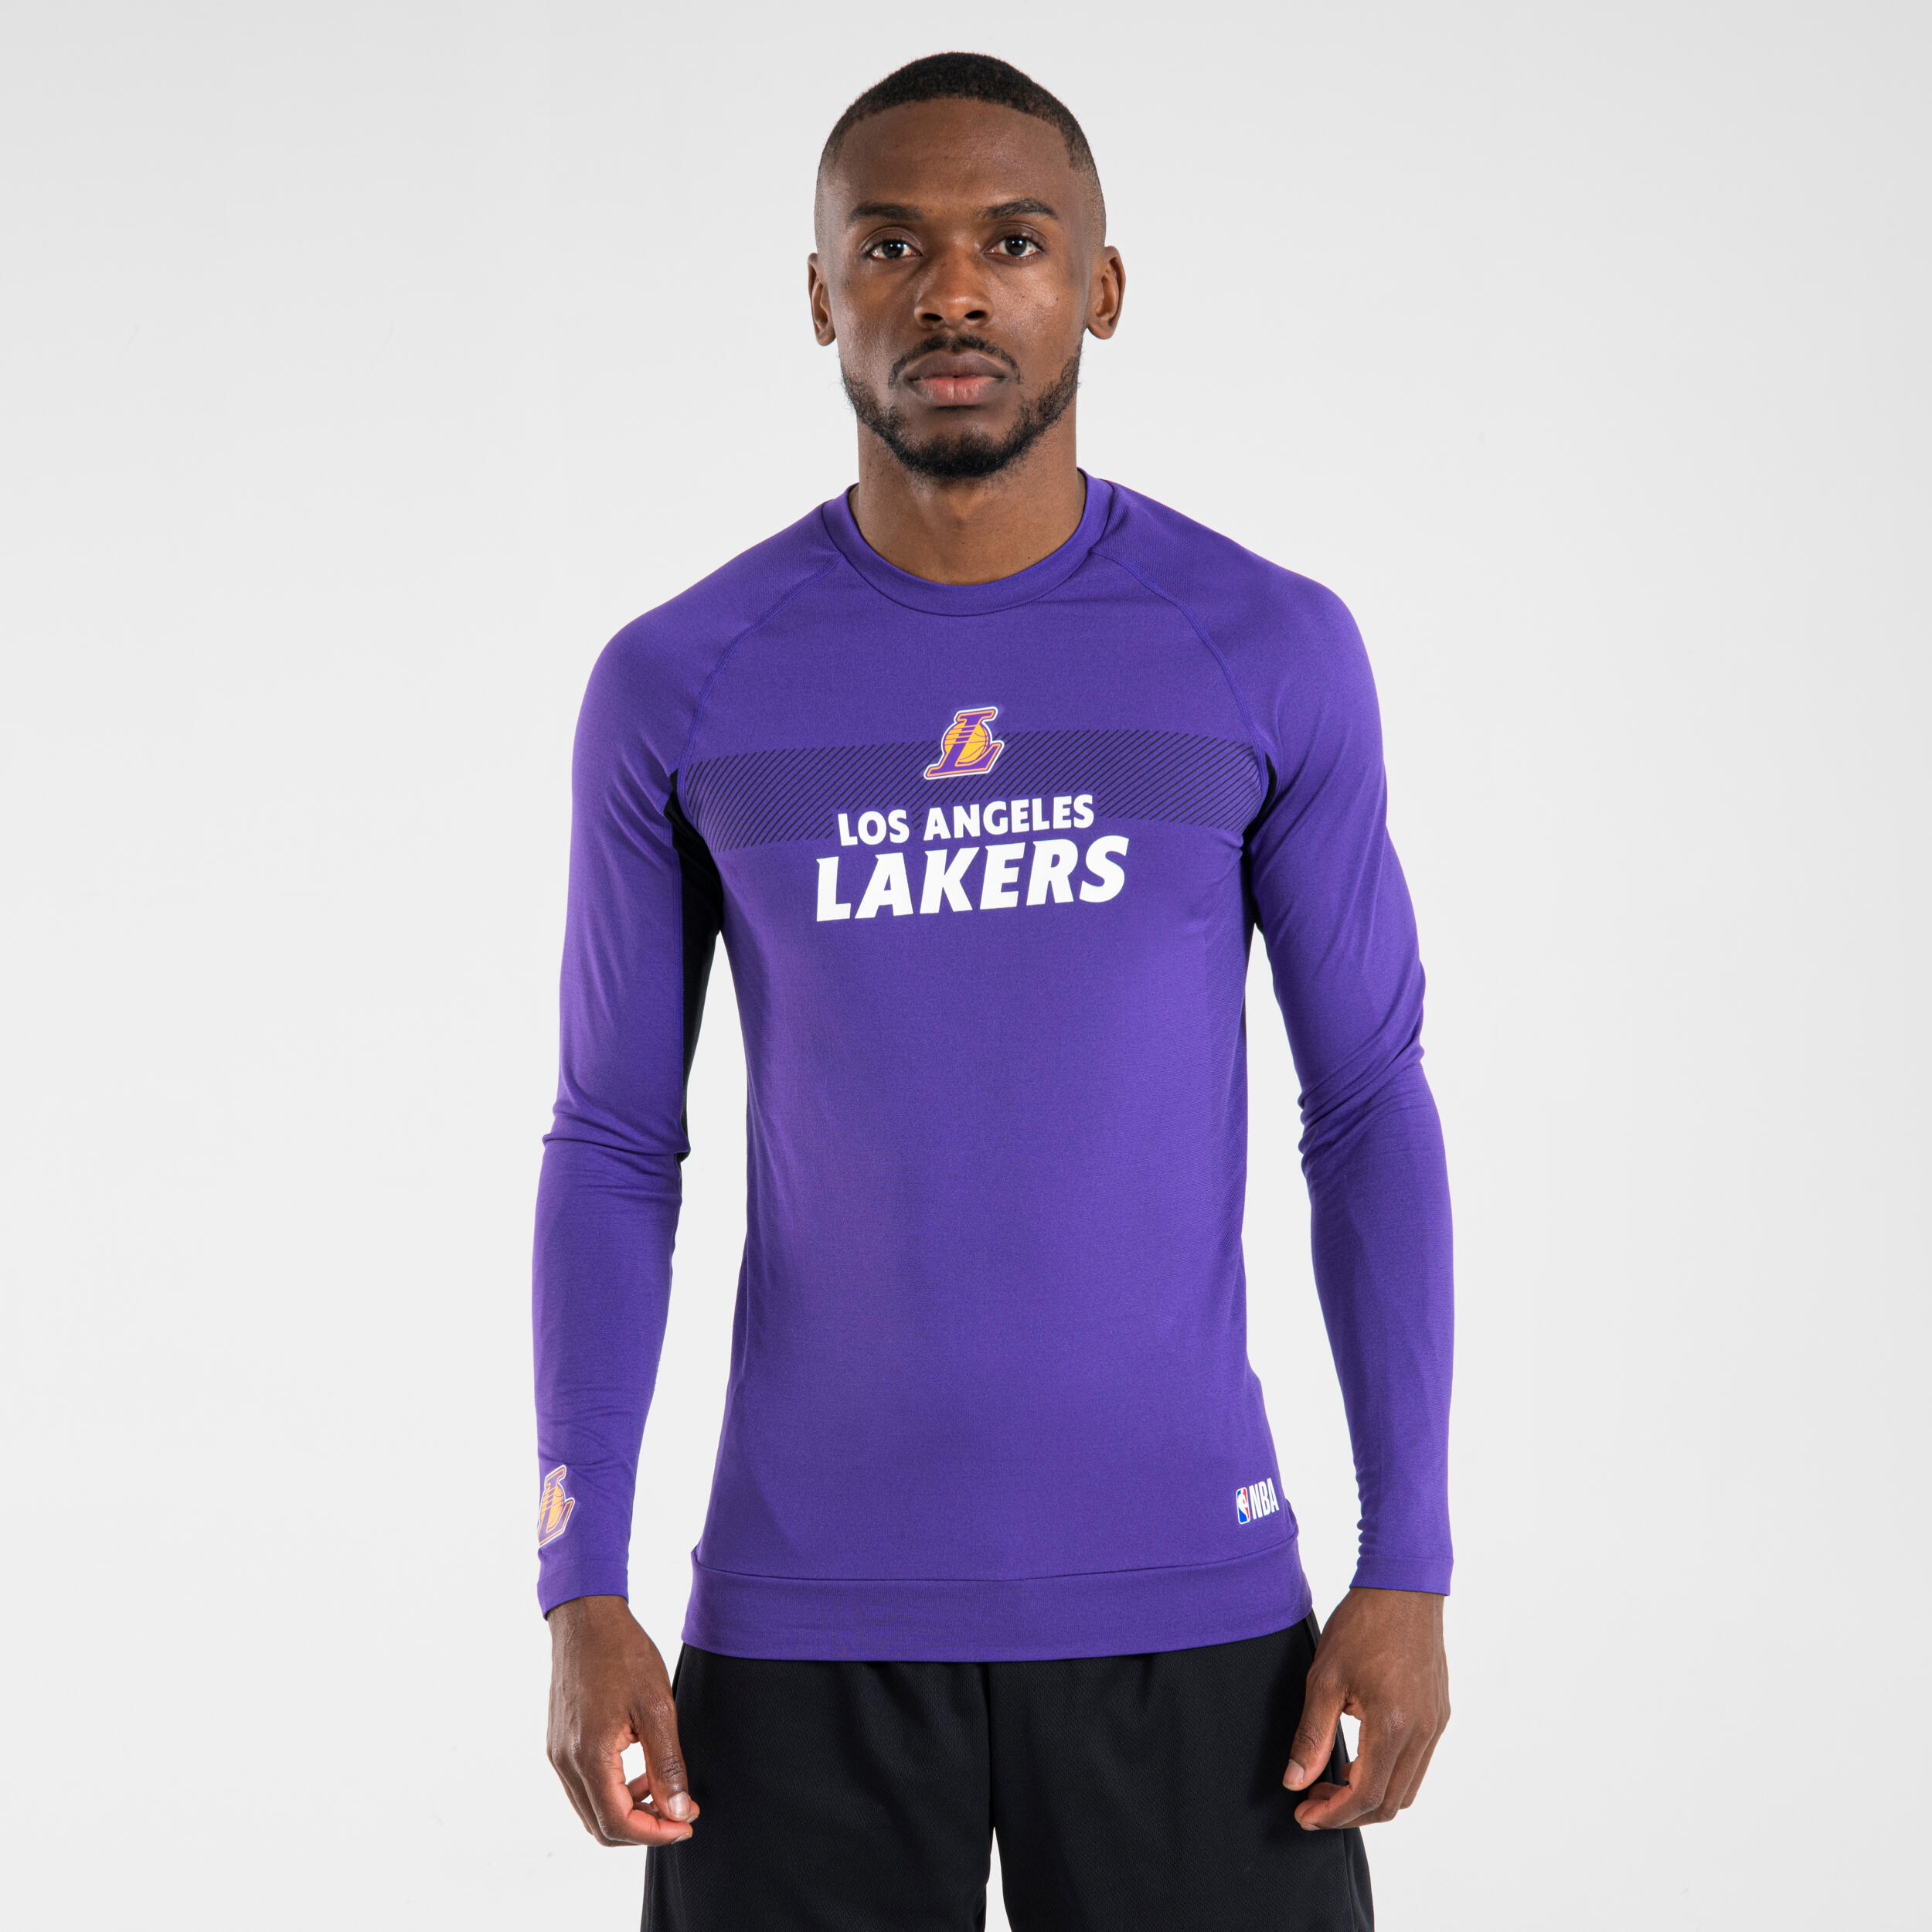 Men's/Women's Basketball Base Layer Jersey UT500 - NBA Los Angeles Lakers/Purple 1/9